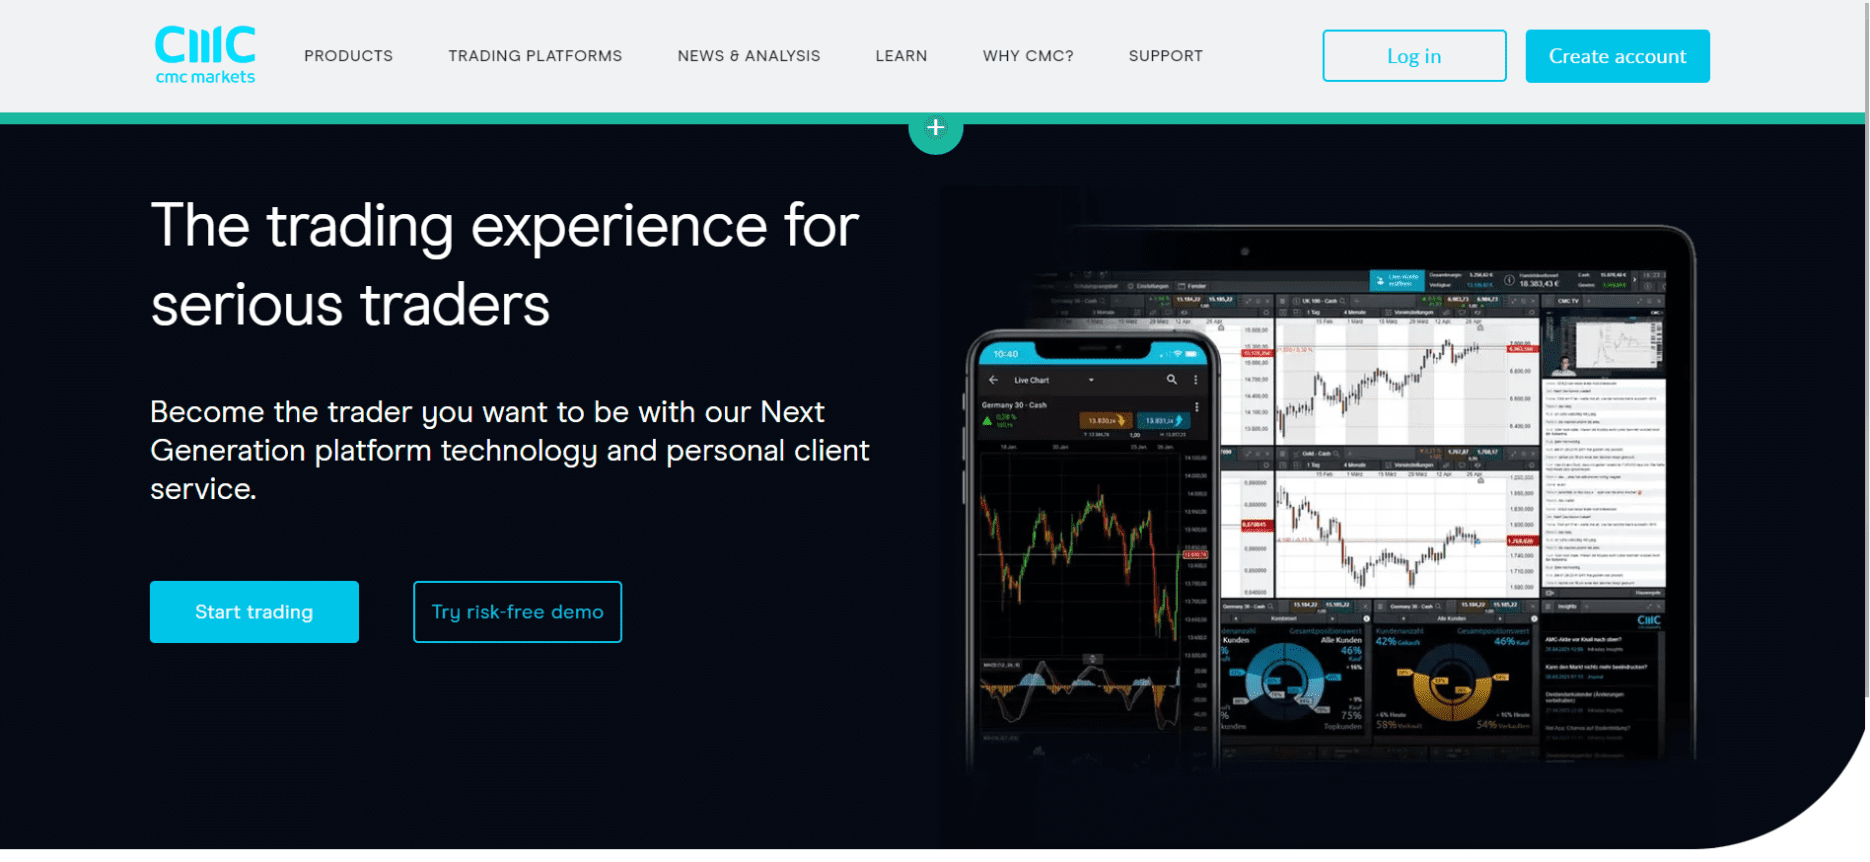 CMC Markets homepage